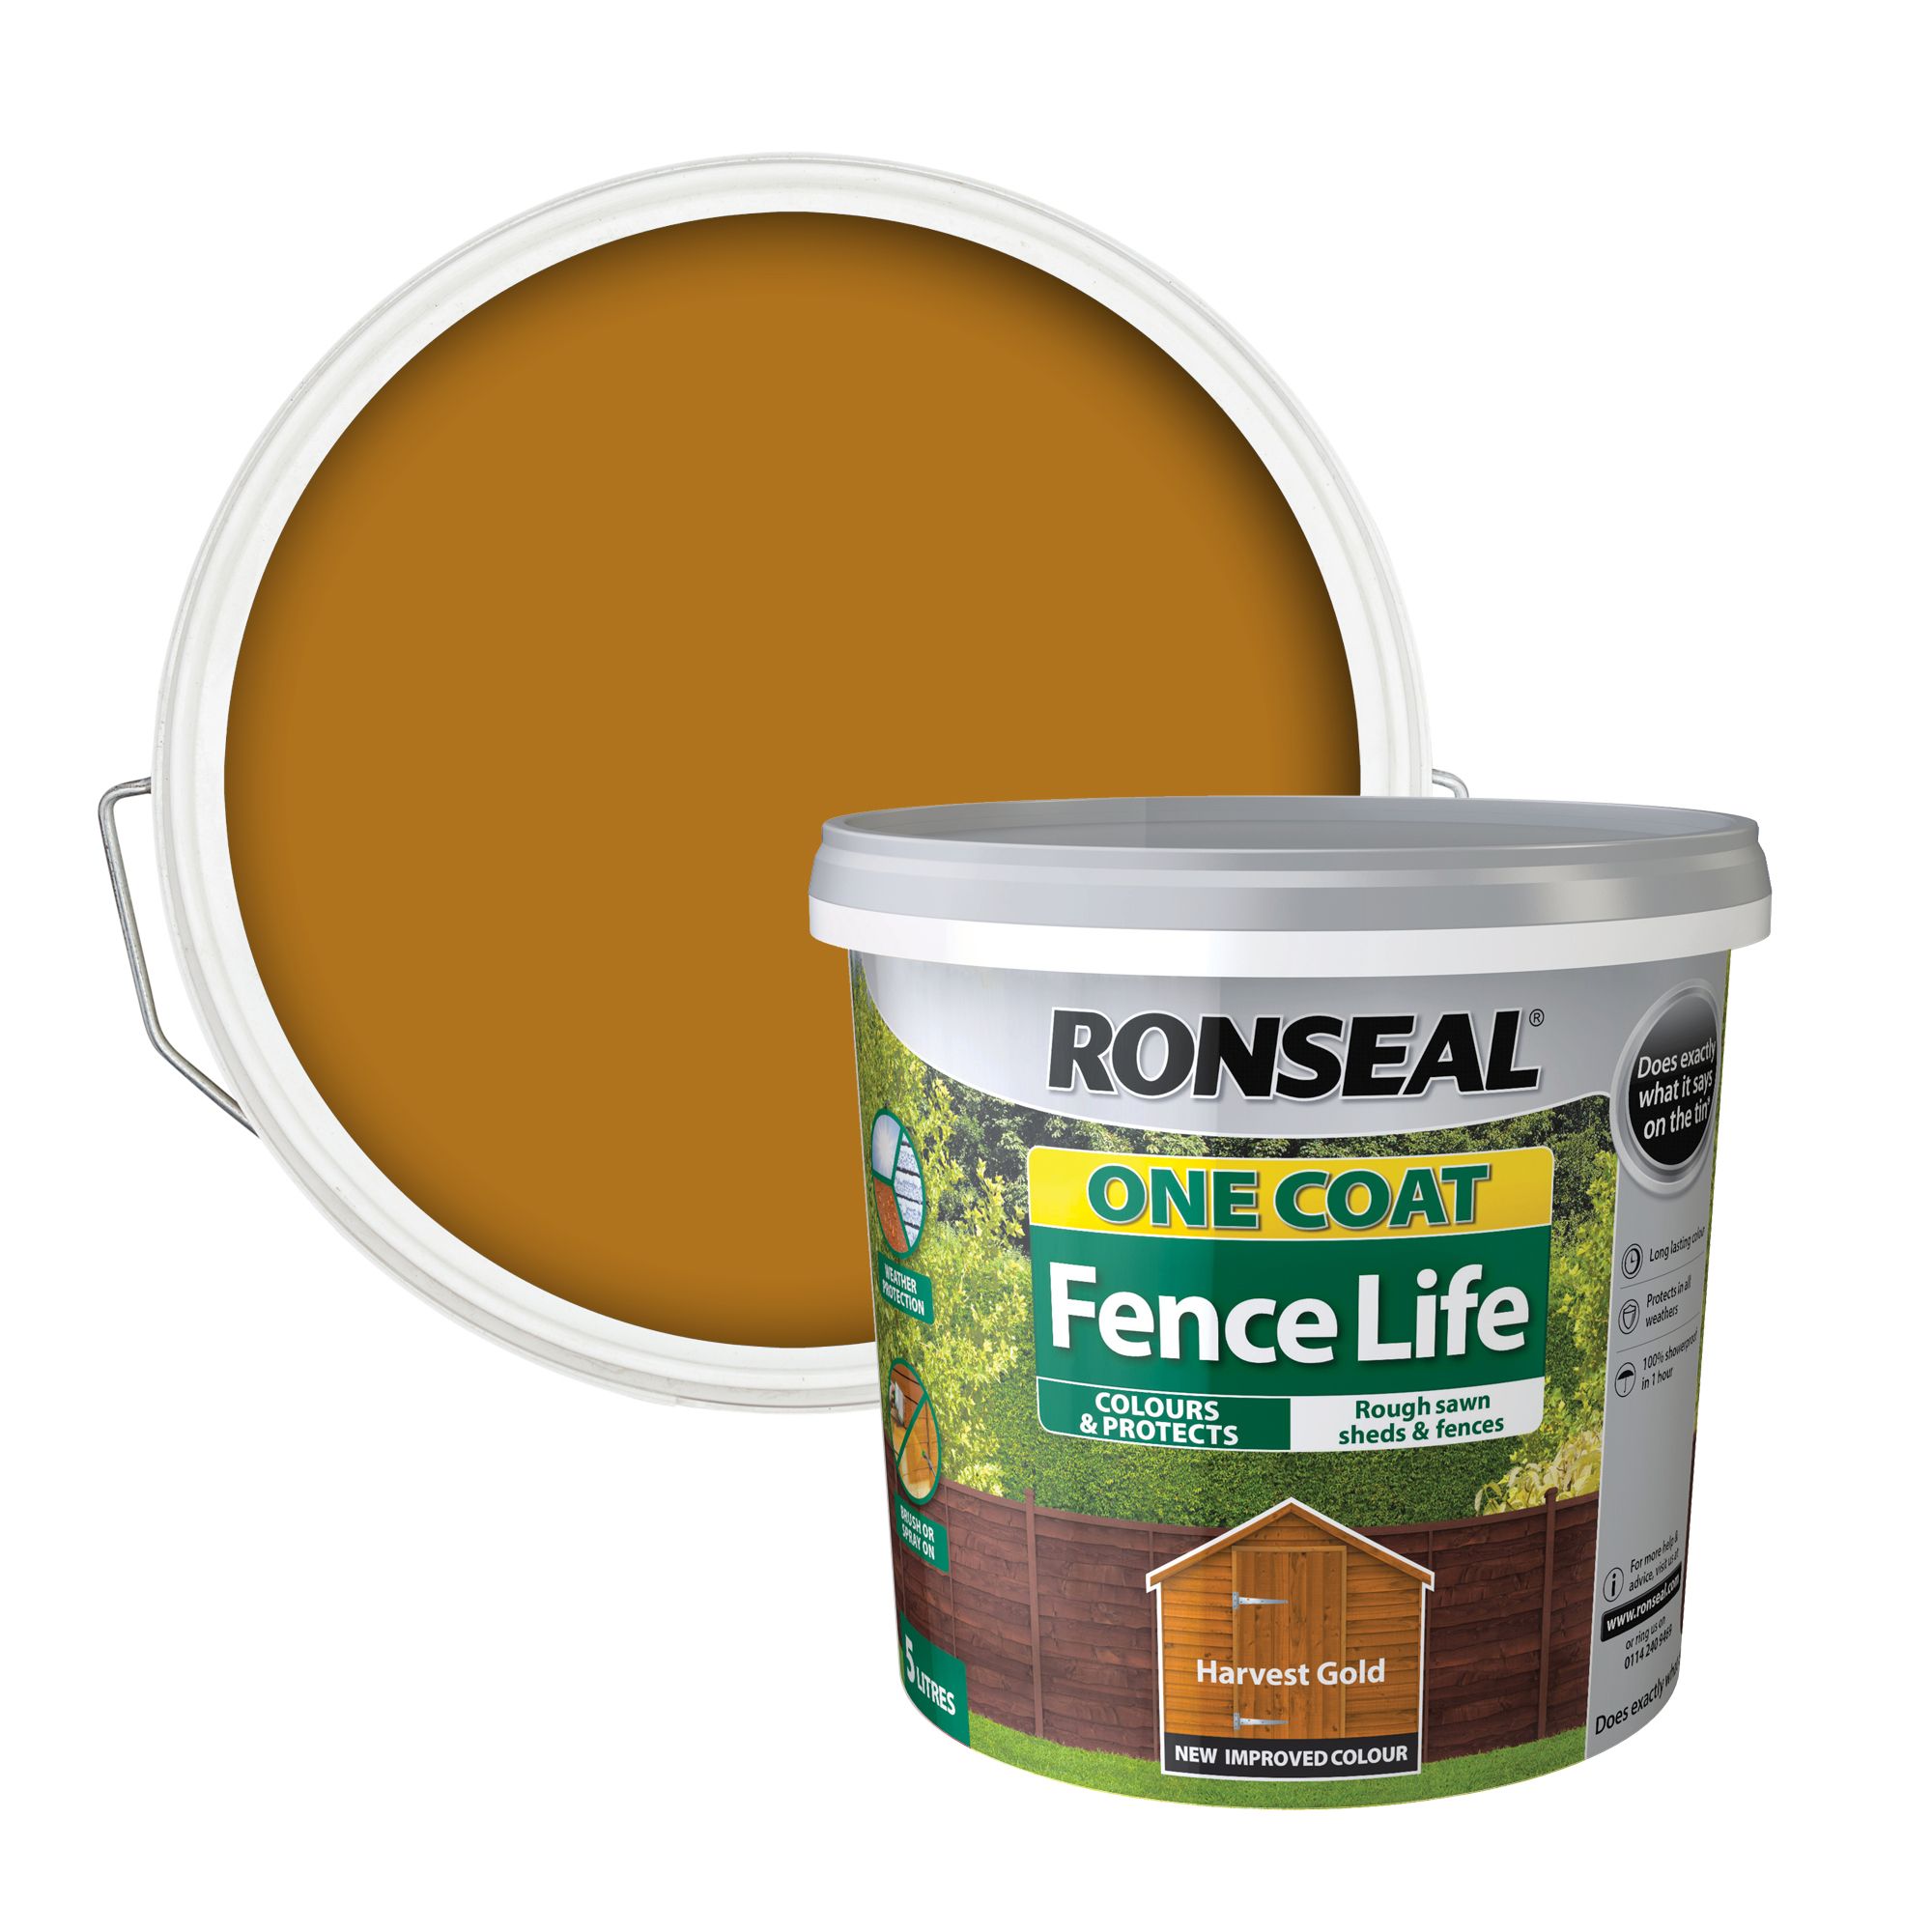 Ronseal One Coat Fence Life Harvest gold Matt Exterior Wood paint, 5L Tub